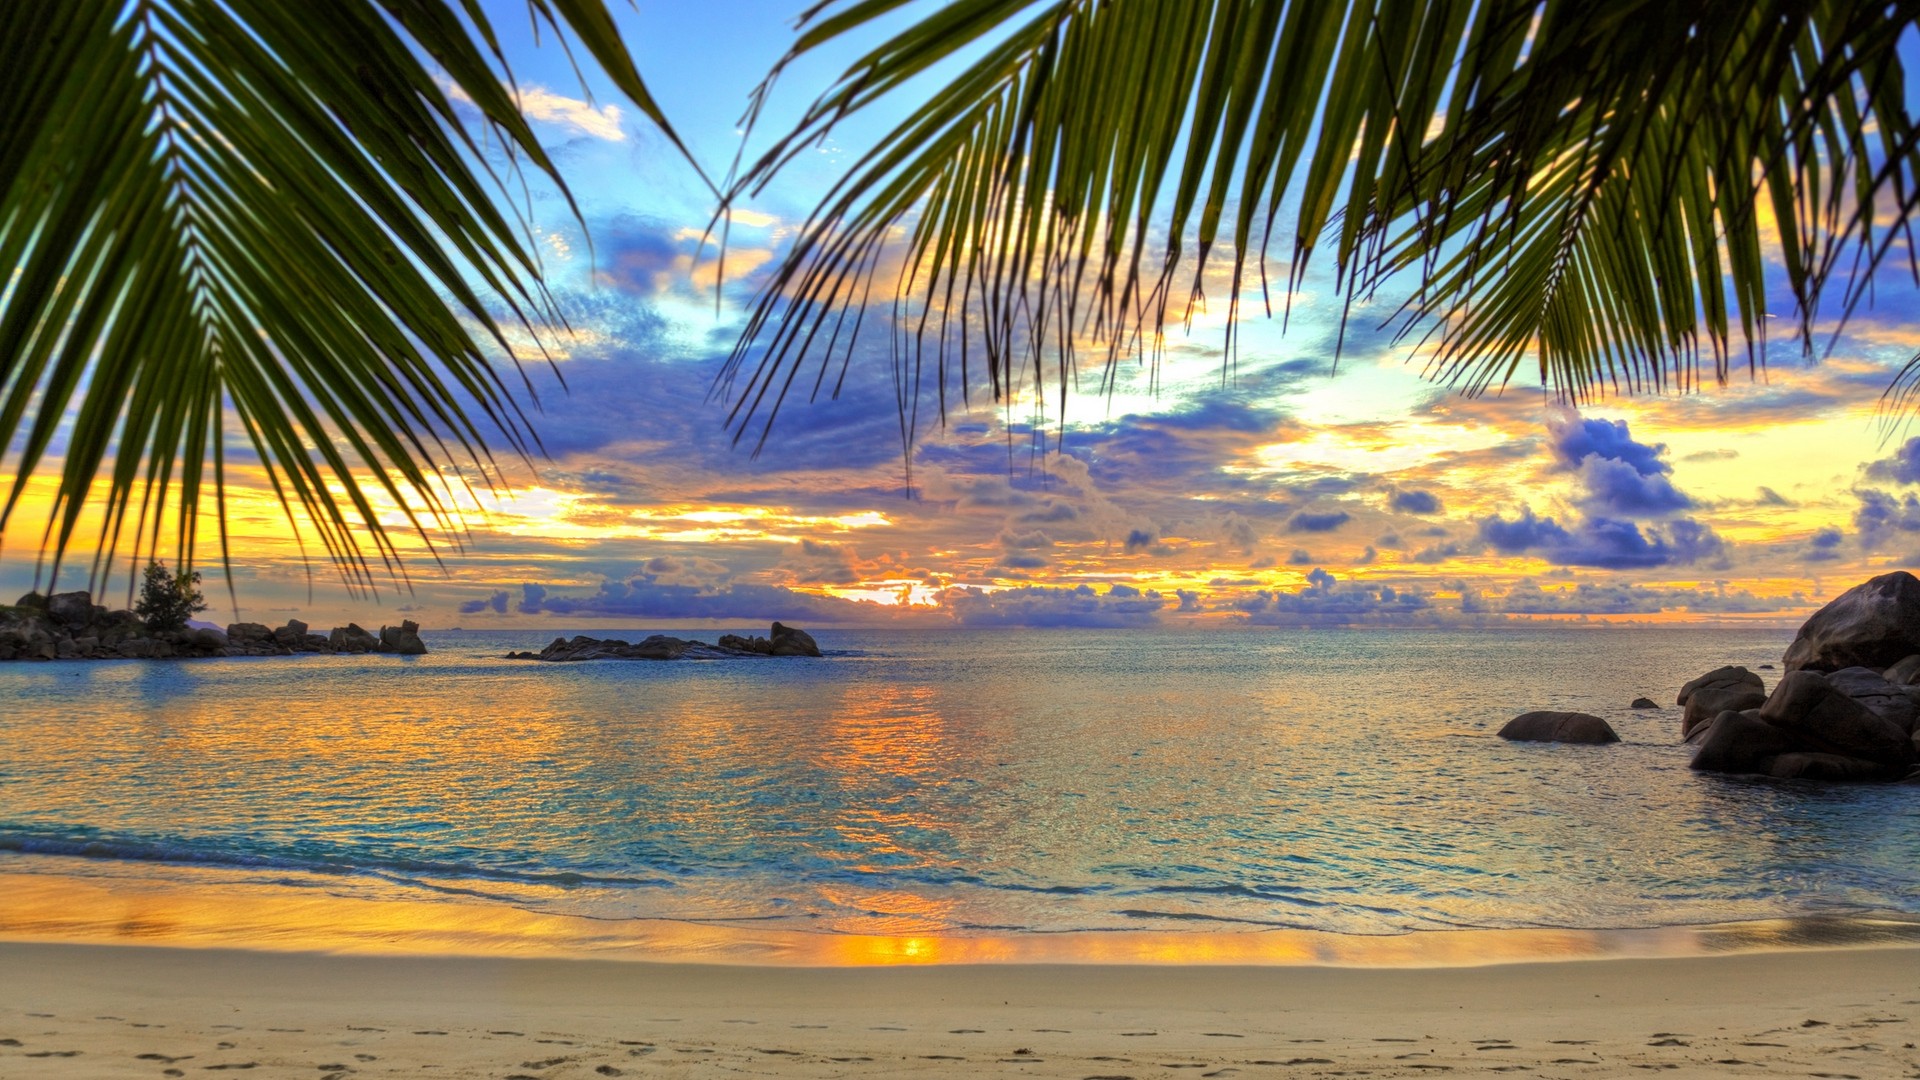 Beautiful palm trees at the beach HD Wallpaper